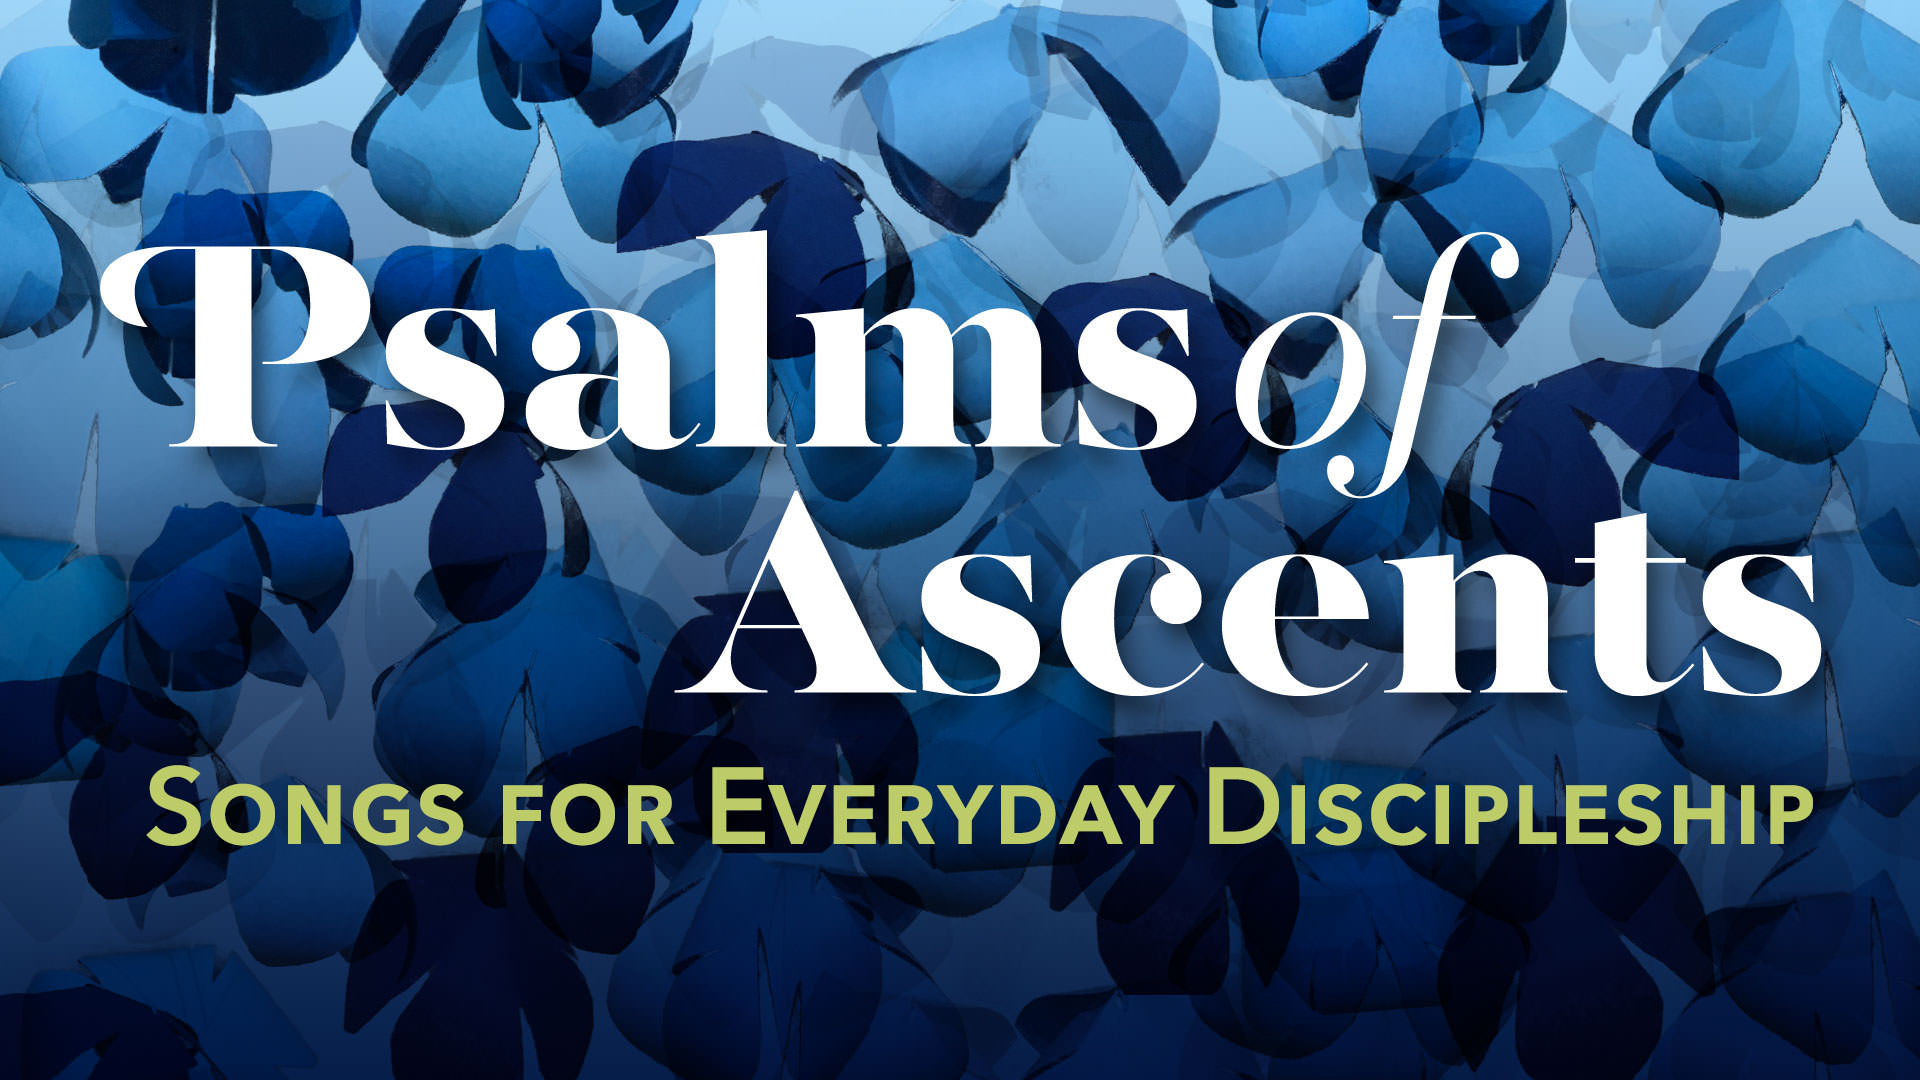 Psalms of Ascents